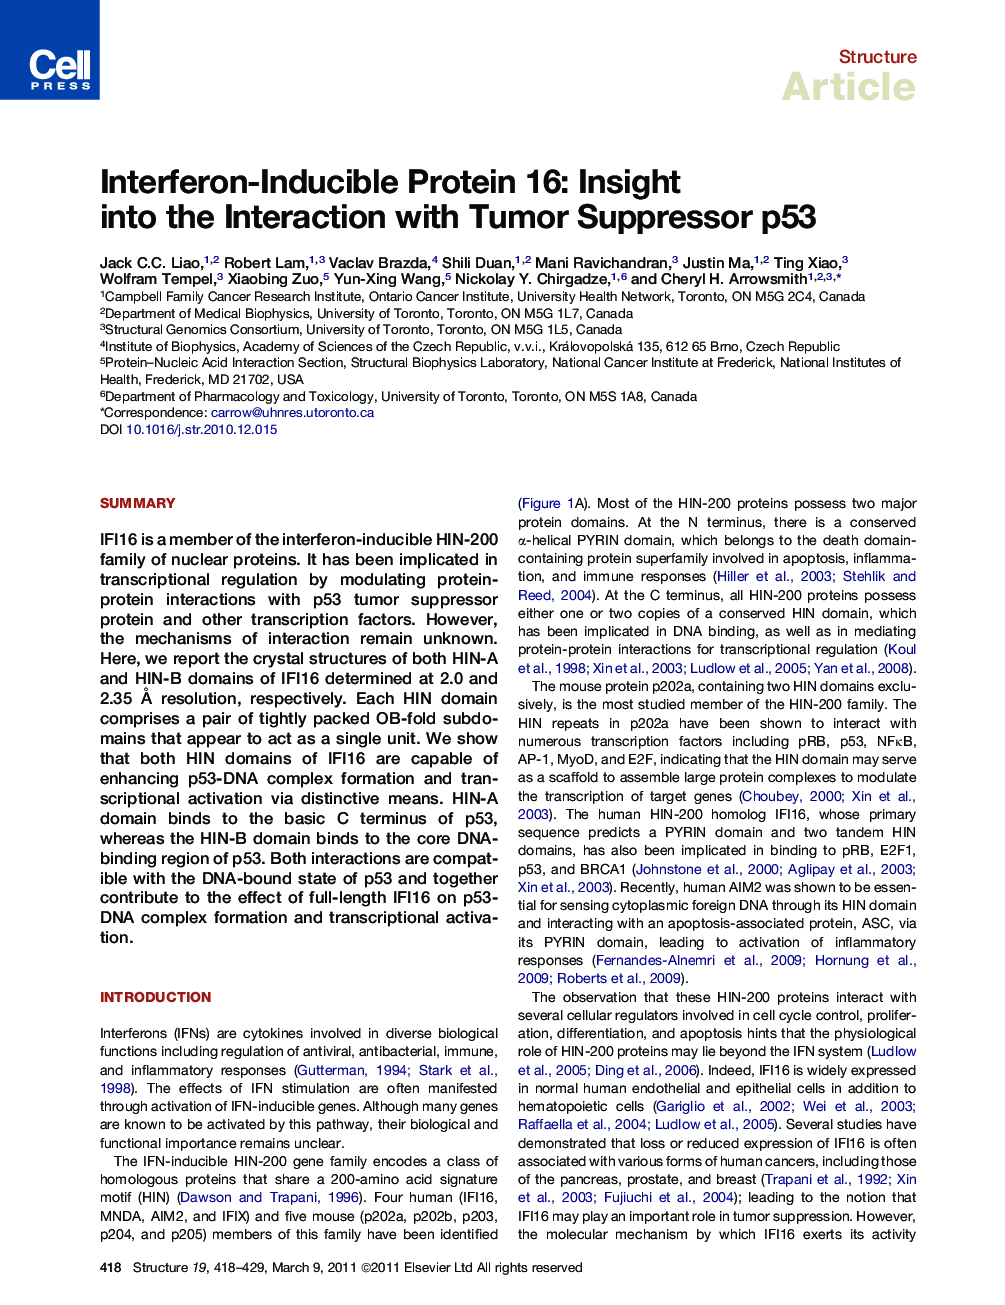 Interferon-Inducible Protein 16: Insight into the Interaction with Tumor Suppressor p53